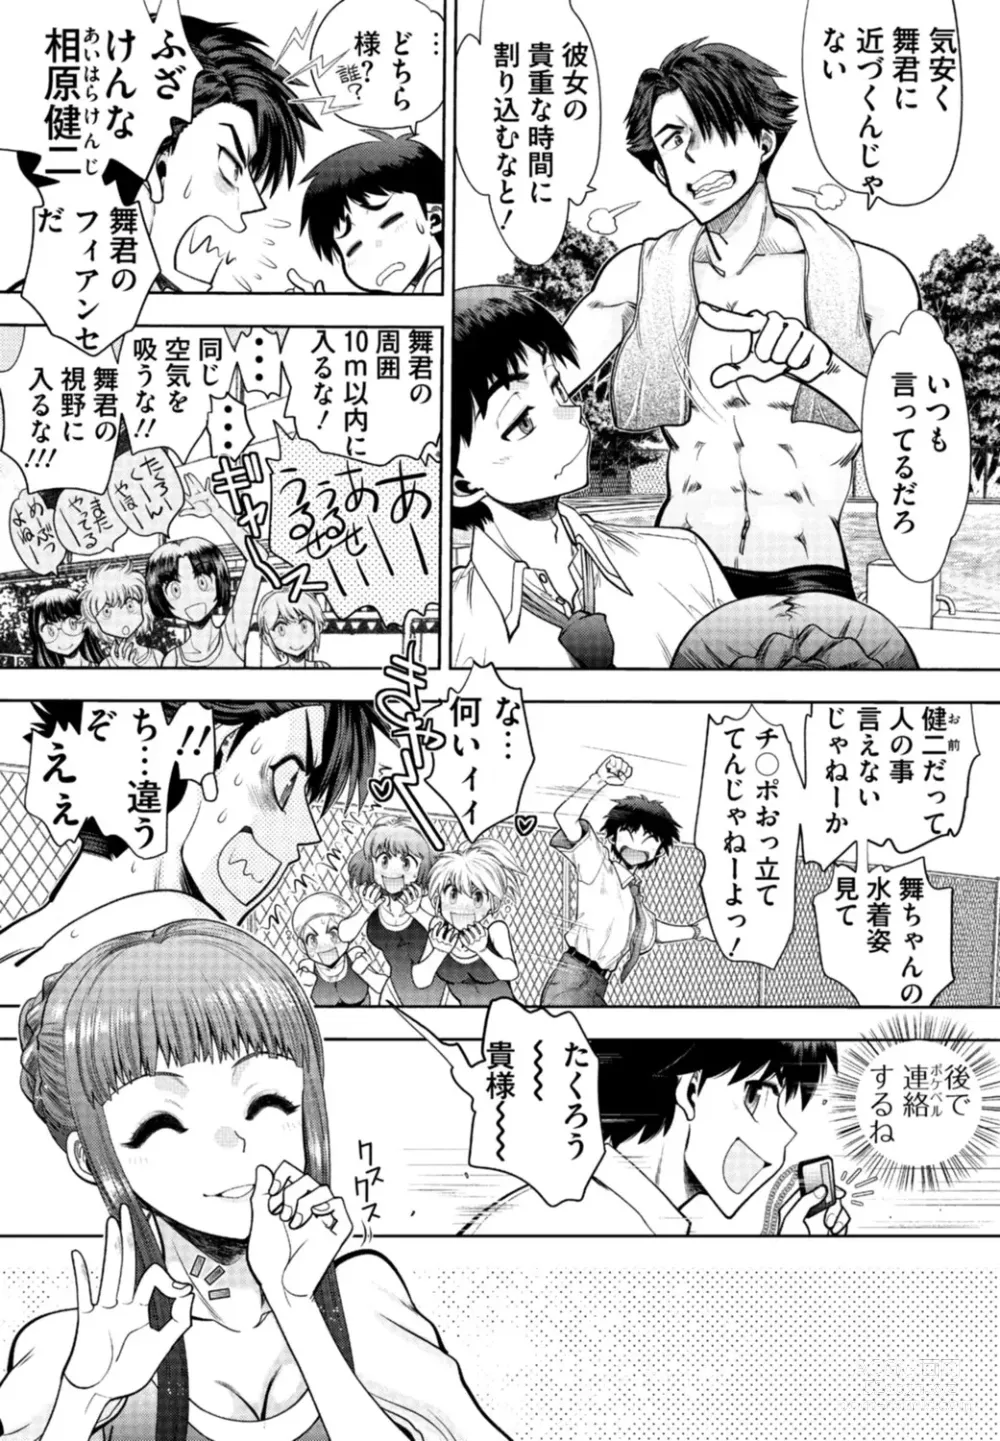 Page 7 of manga Doukyuusei  Remake Adult Edition